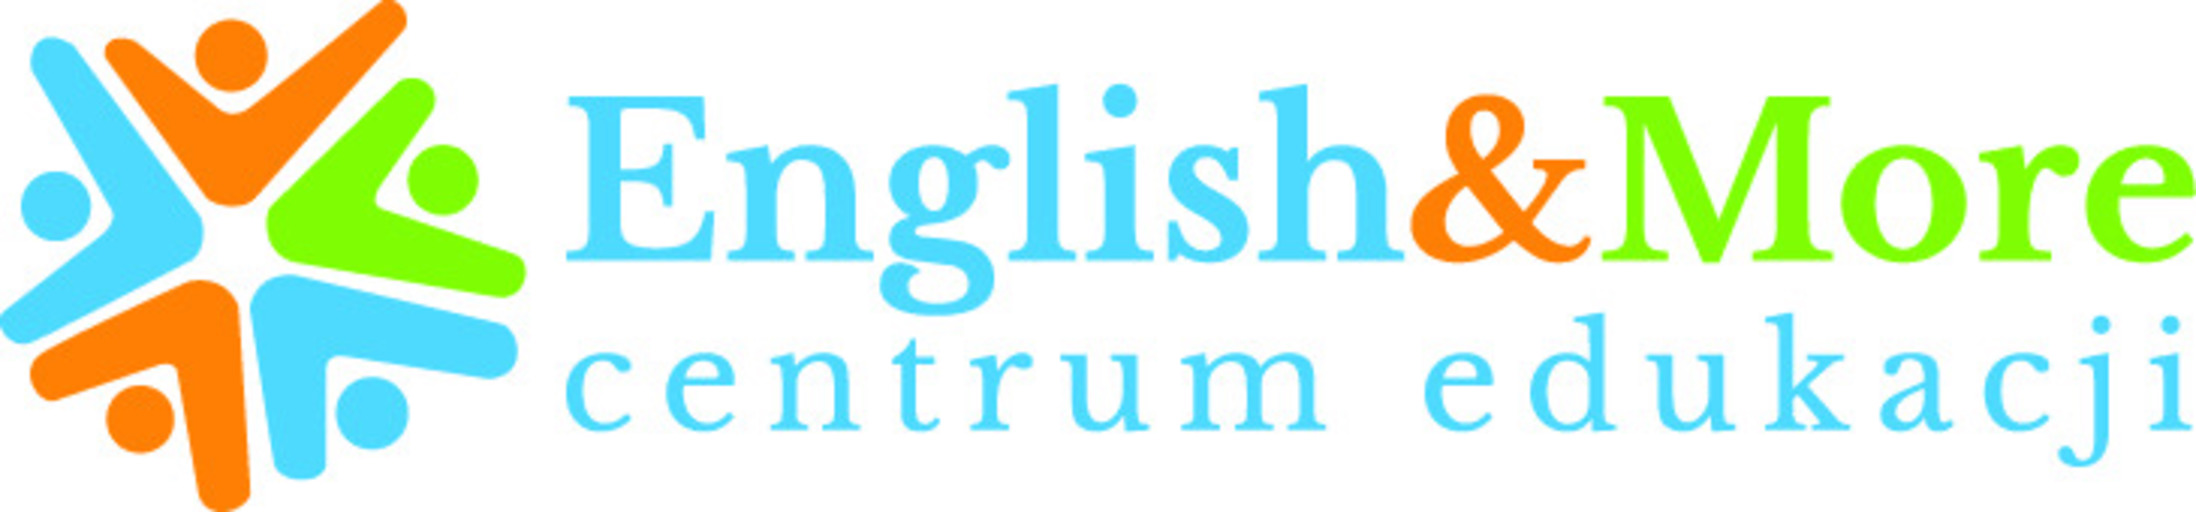 English&More Centrum Edukacji